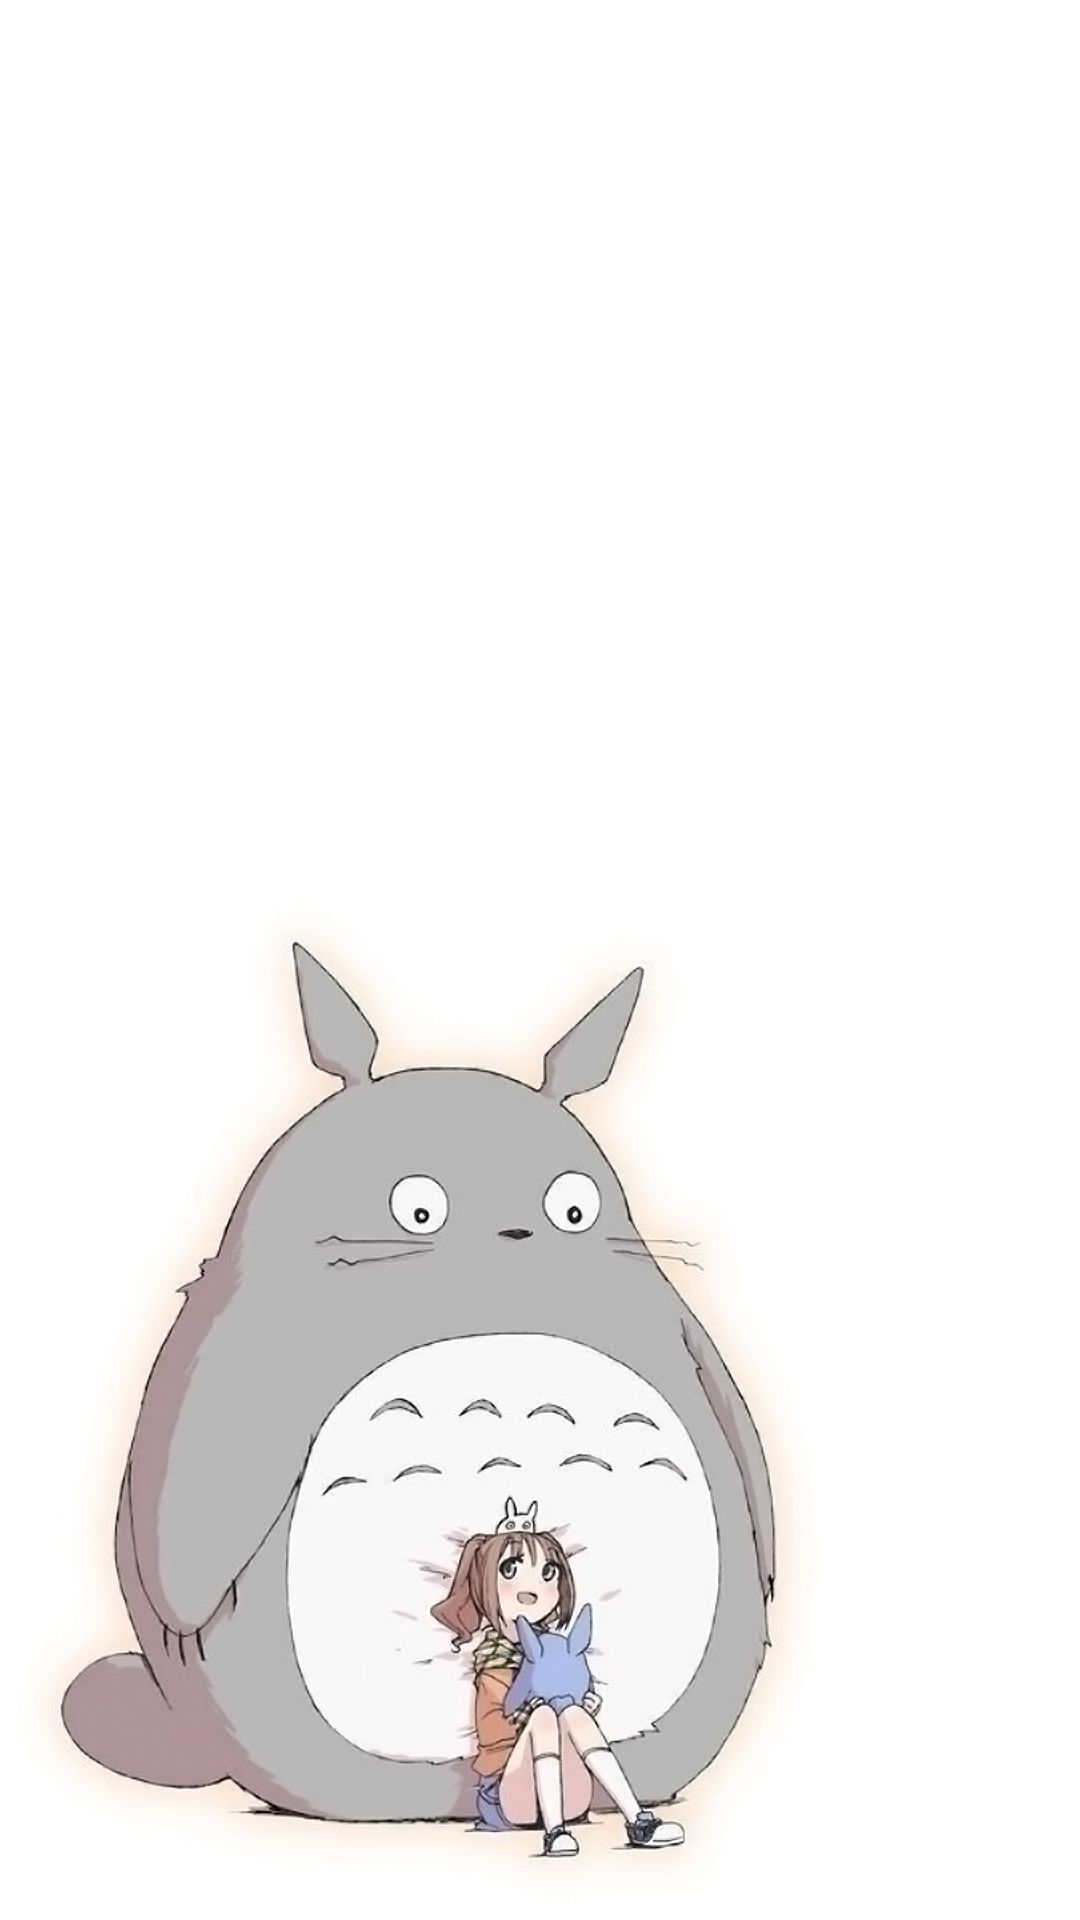 1080x1920 Totoro iPhone Wallpapers Top Free Totoro iPhone Backgrounds | Iphone wallpaper totoro, Totoro, Anime wallpaper